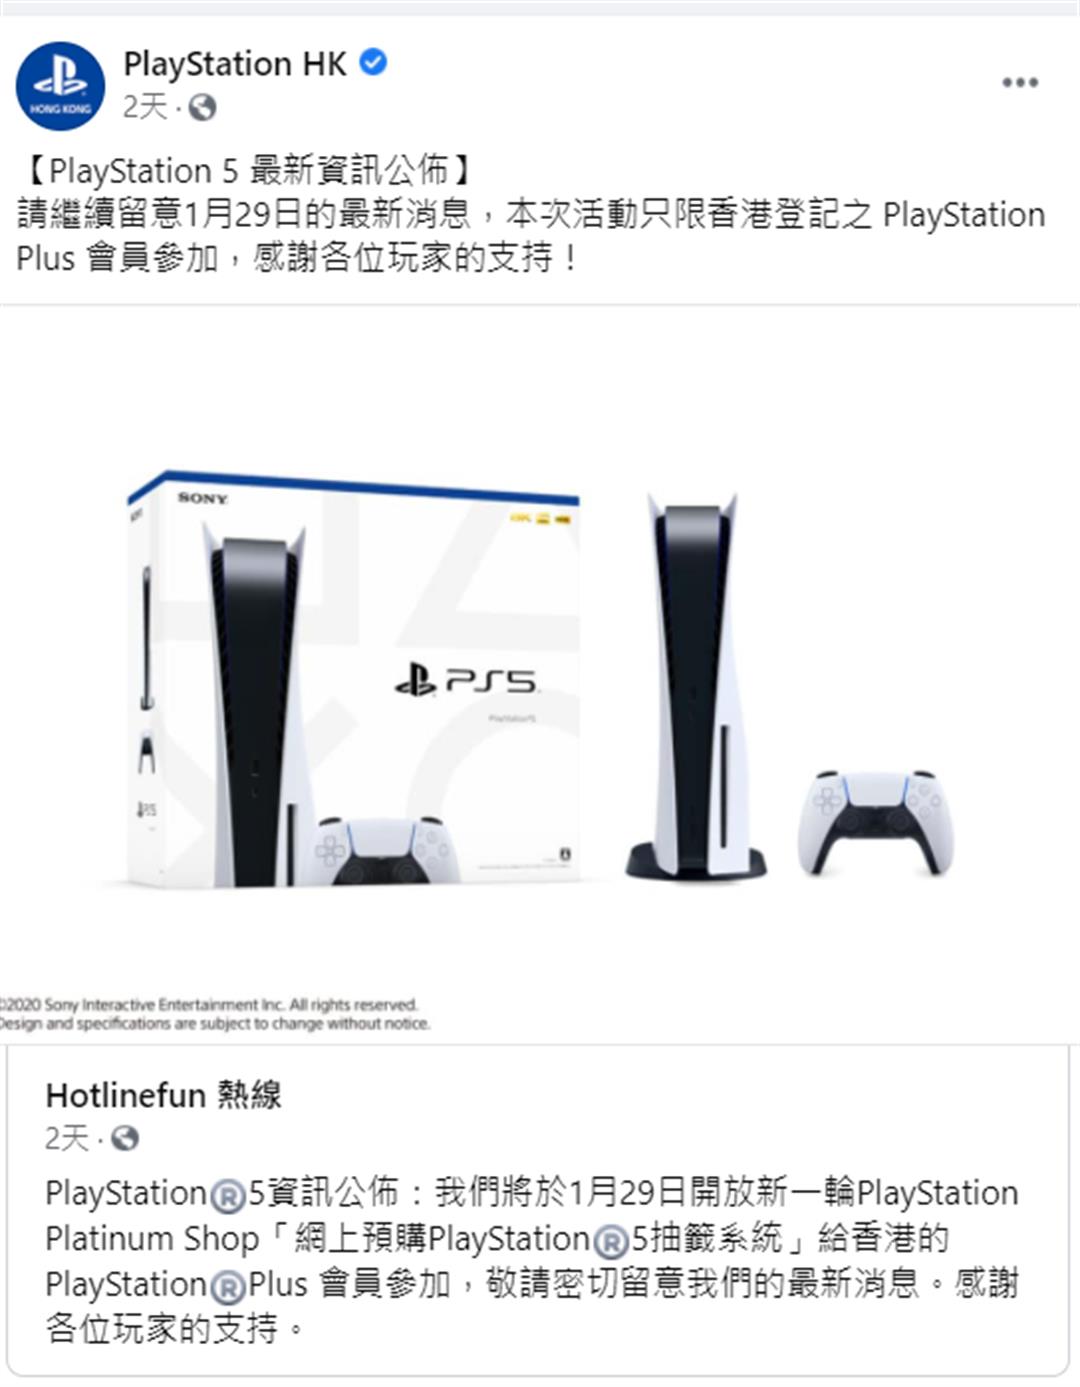 PlayStation HK